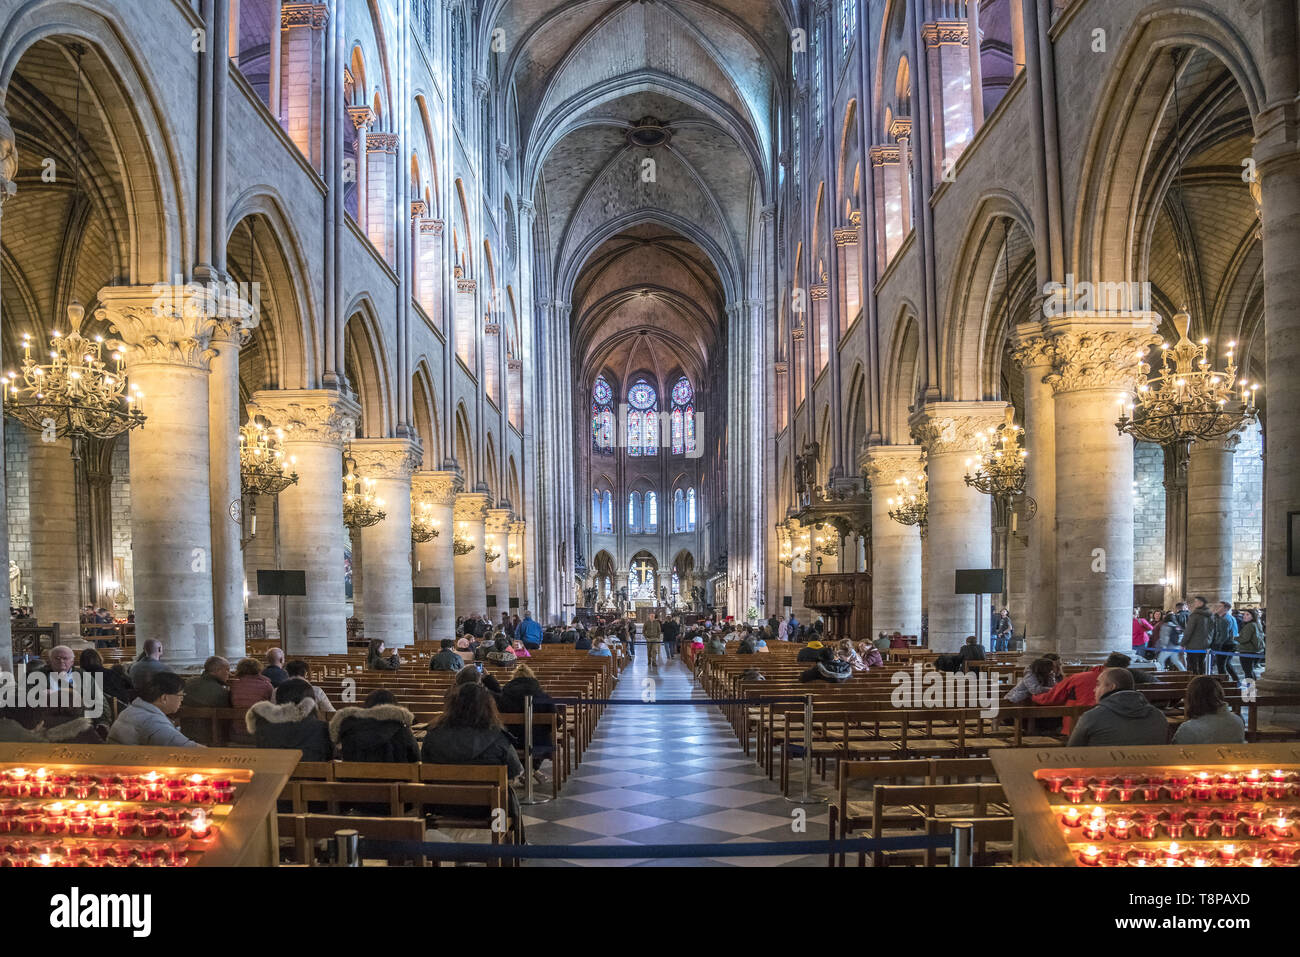 Innenraum der Kathedrale Notre-Dame, Paris, Frankreich | Notre-Dame  cathedral interior, Paris, France | usage worldwide Stock Photo - Alamy